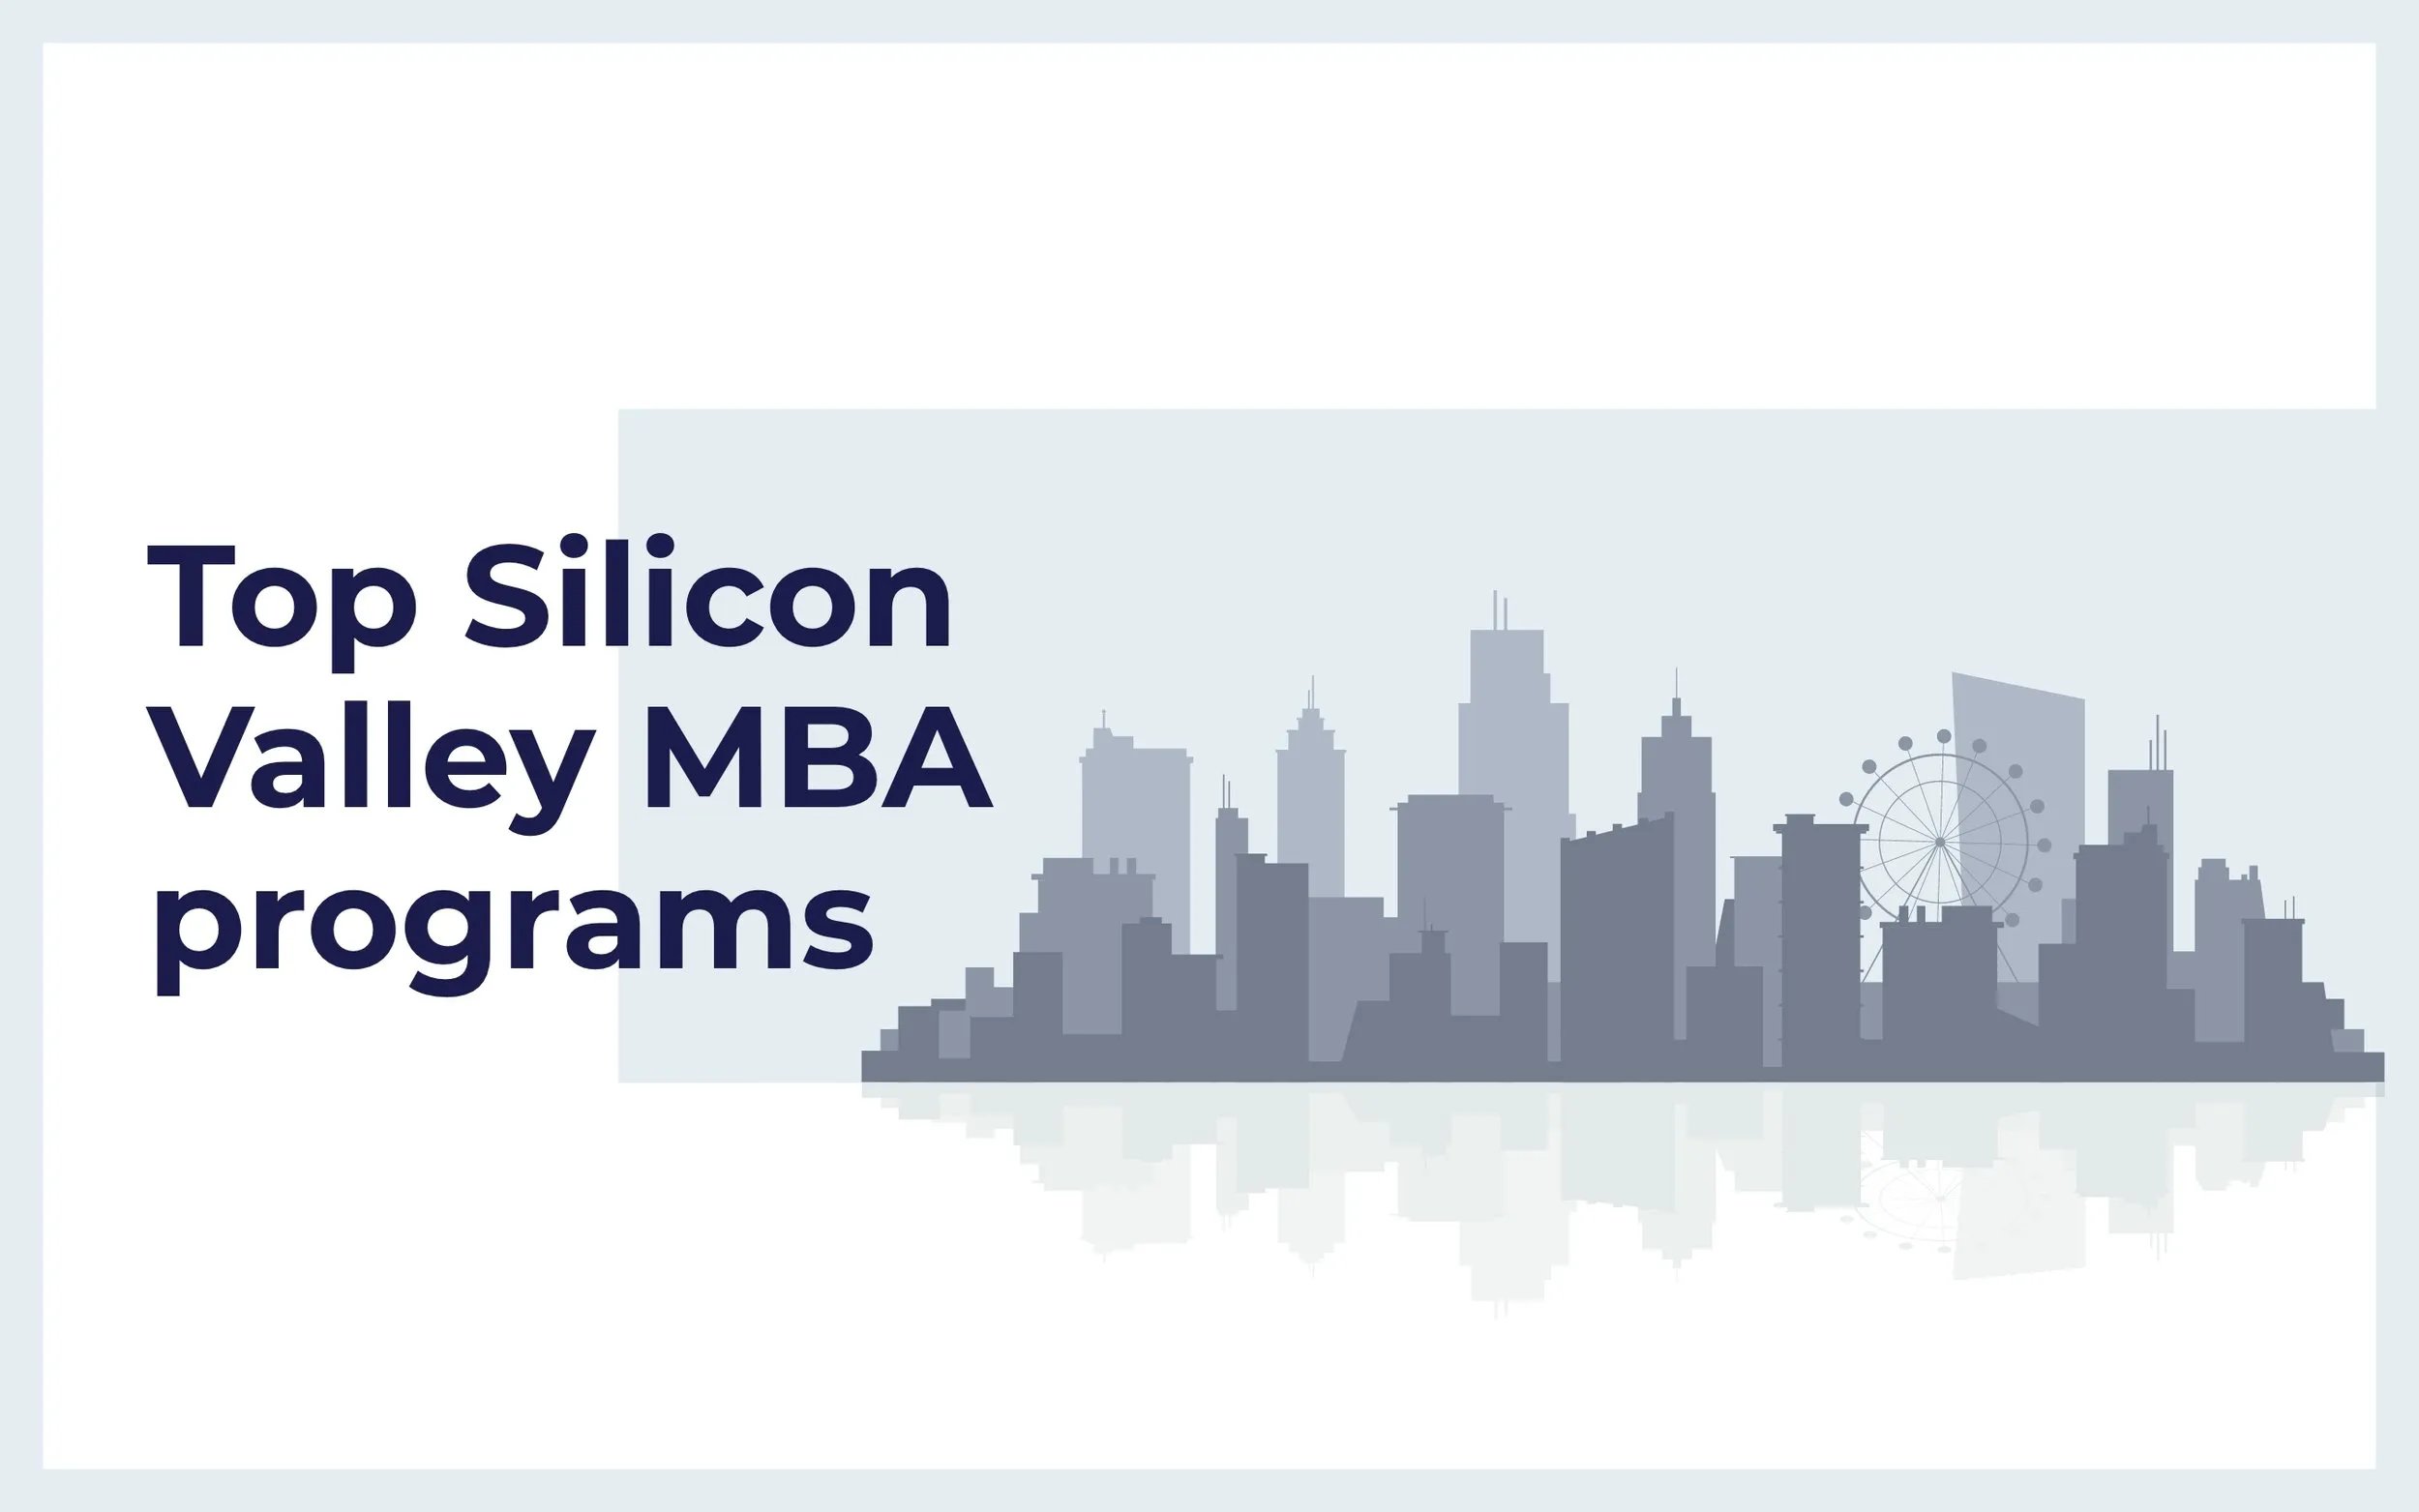 Top Silicon Valley MBA programs